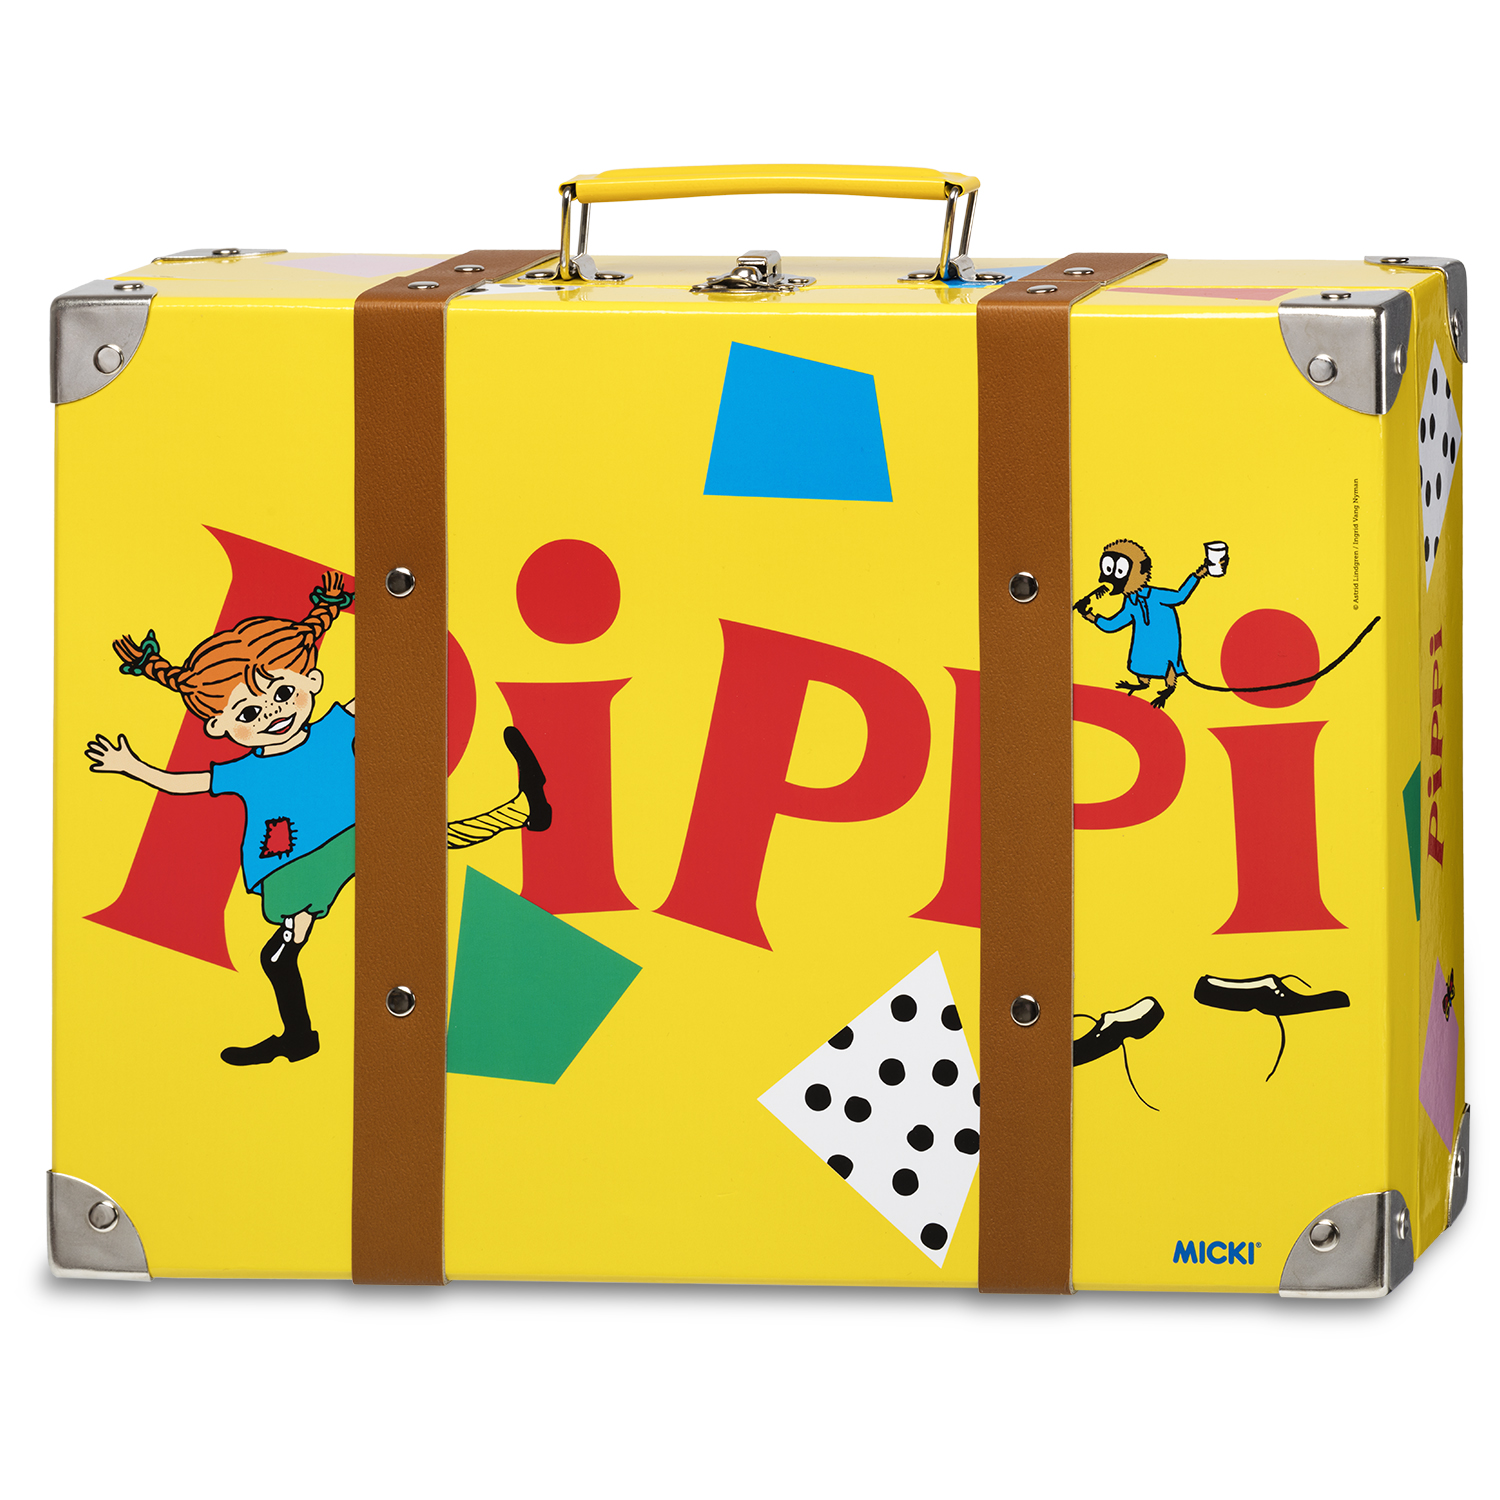 Pippi pippi kids' bag travel bag 32 cm yellow